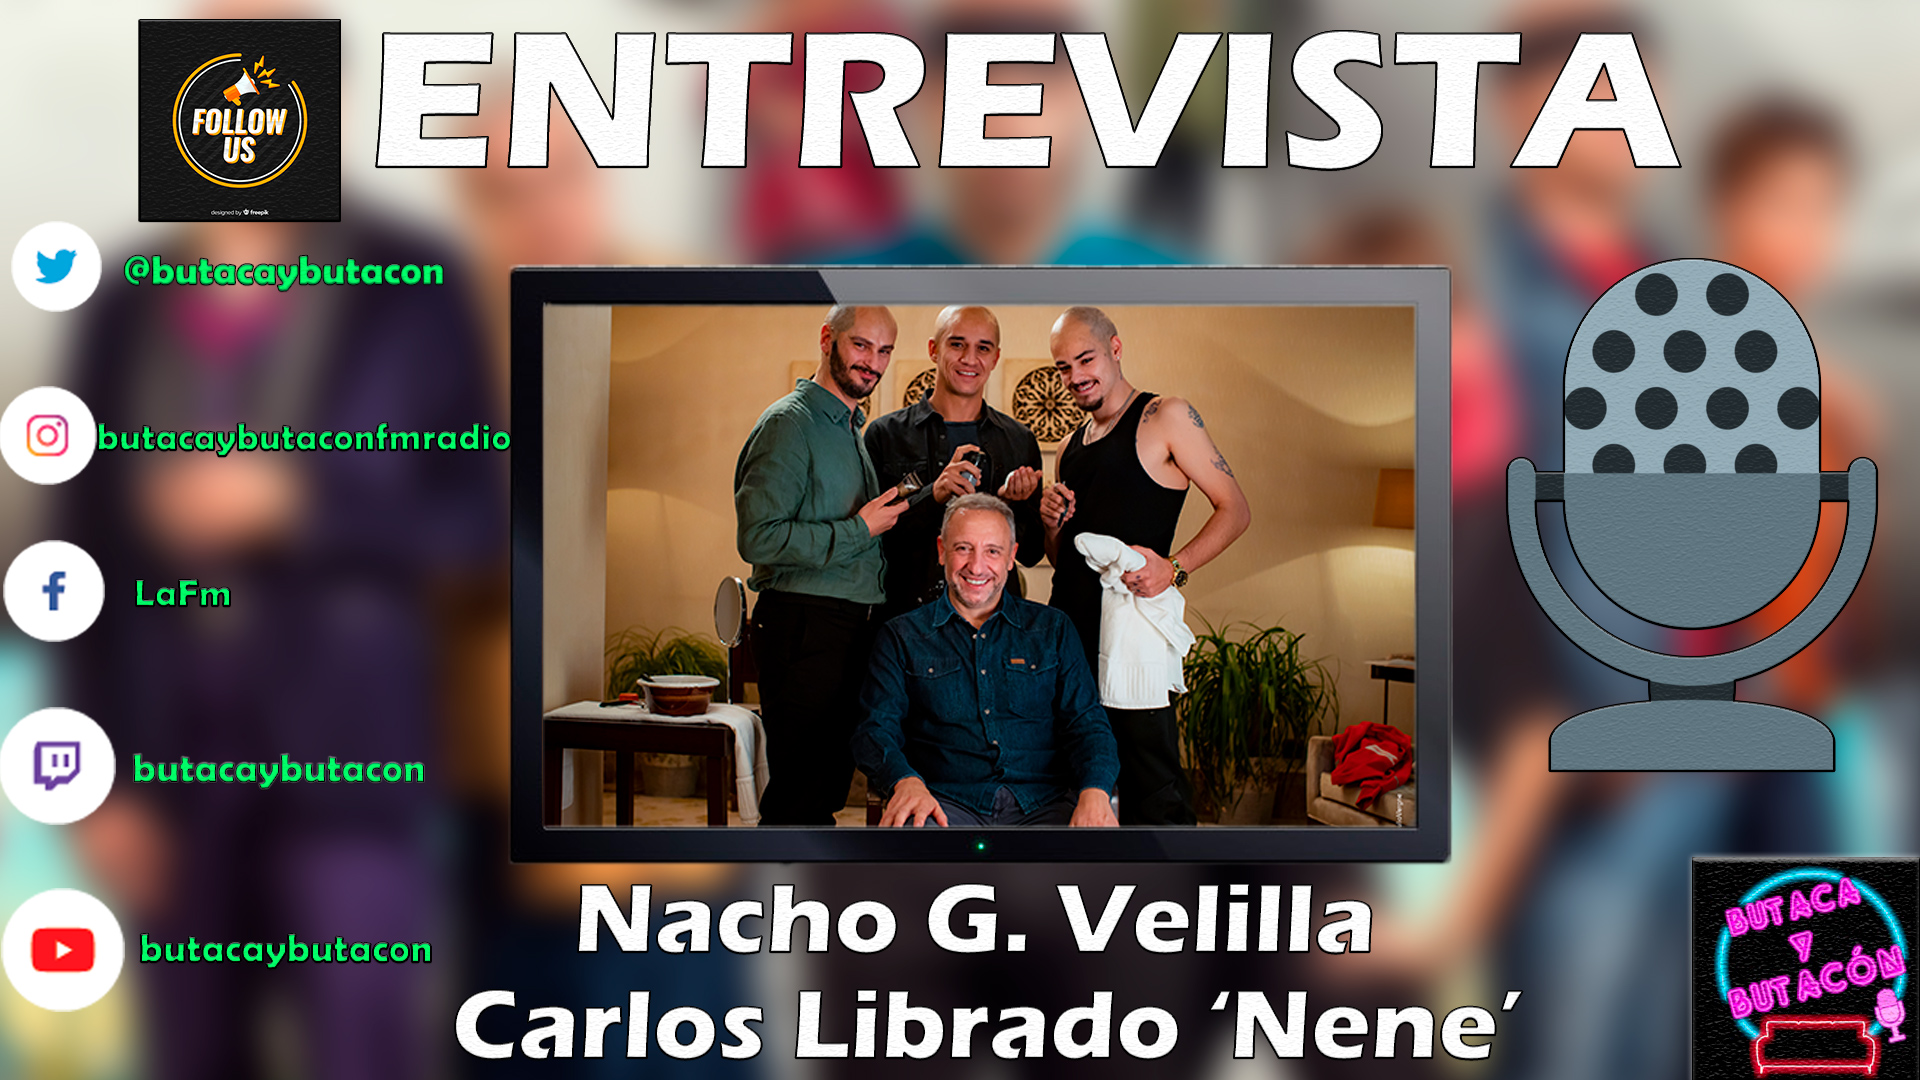 Entrevista a Nacho G. Velilla y Carlos Librado 'Nene'